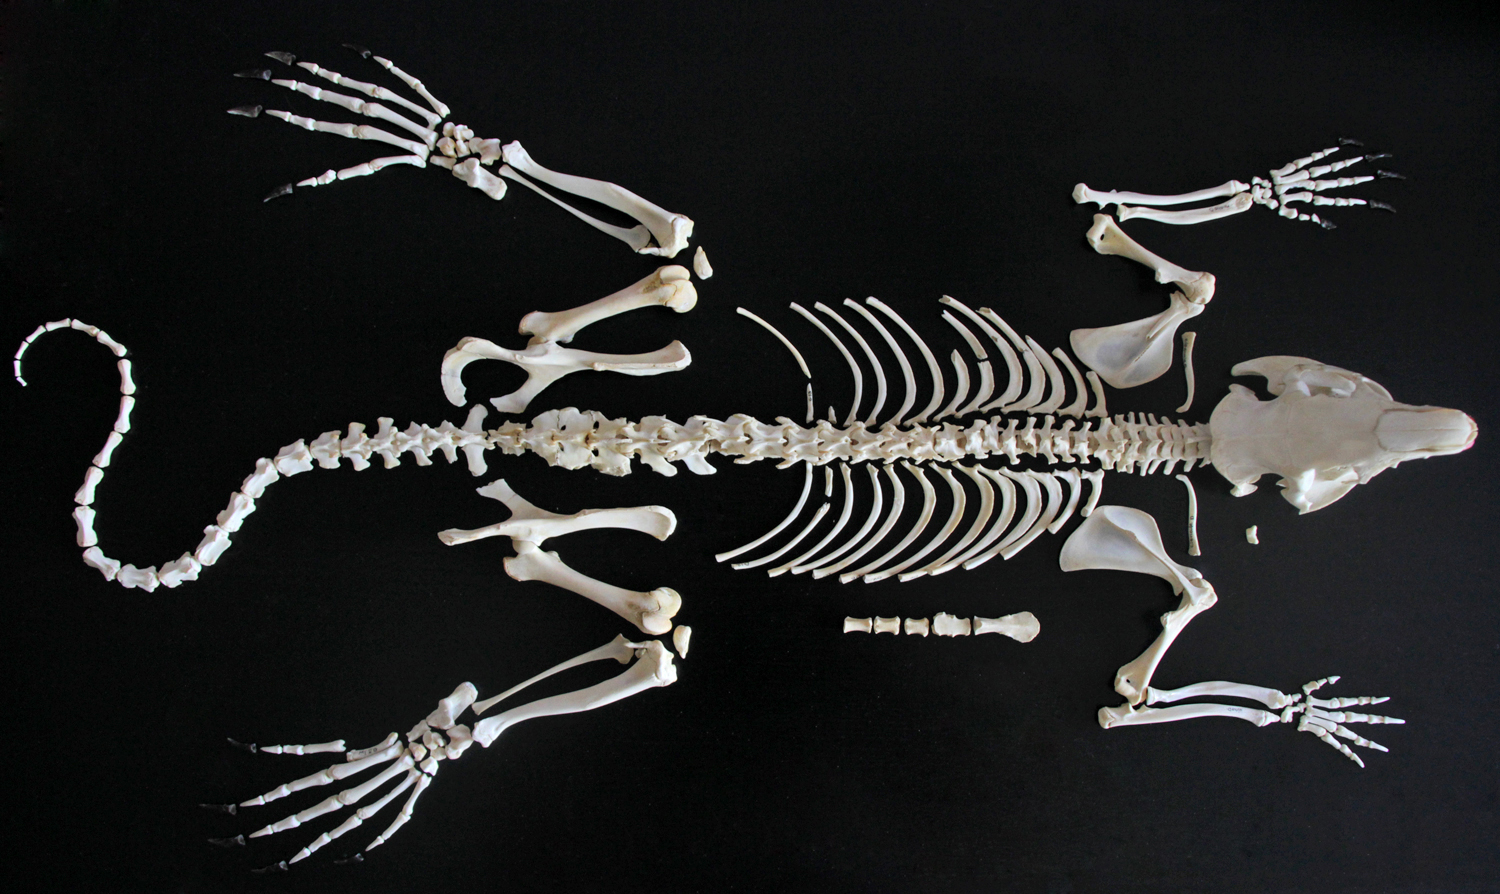 Скелет мыши фото с описанием костей